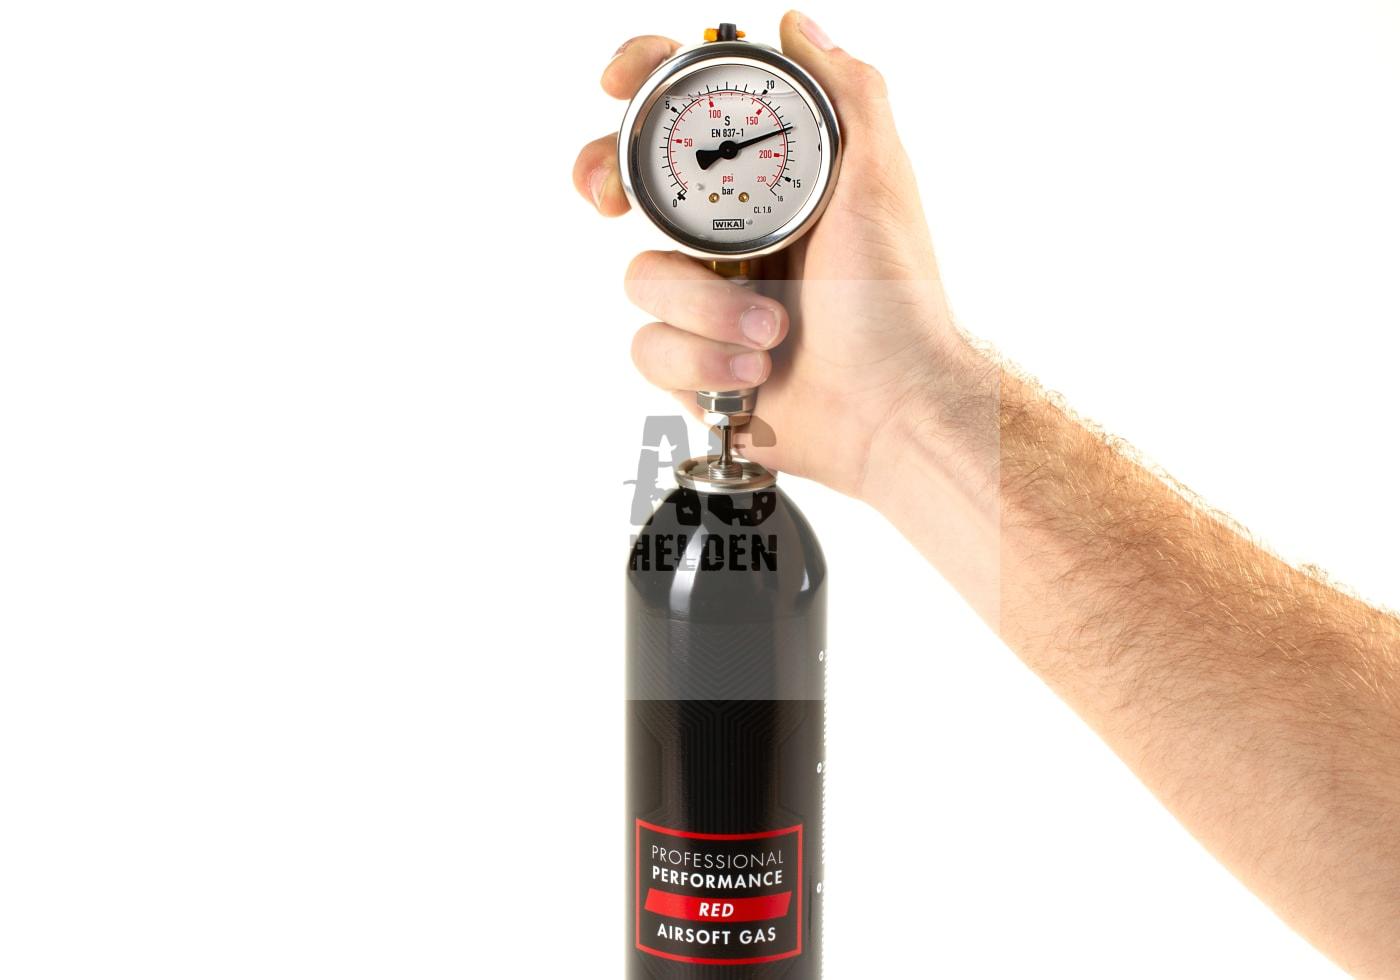 Professional Performance Red Gas 500ml - (Nimrod)